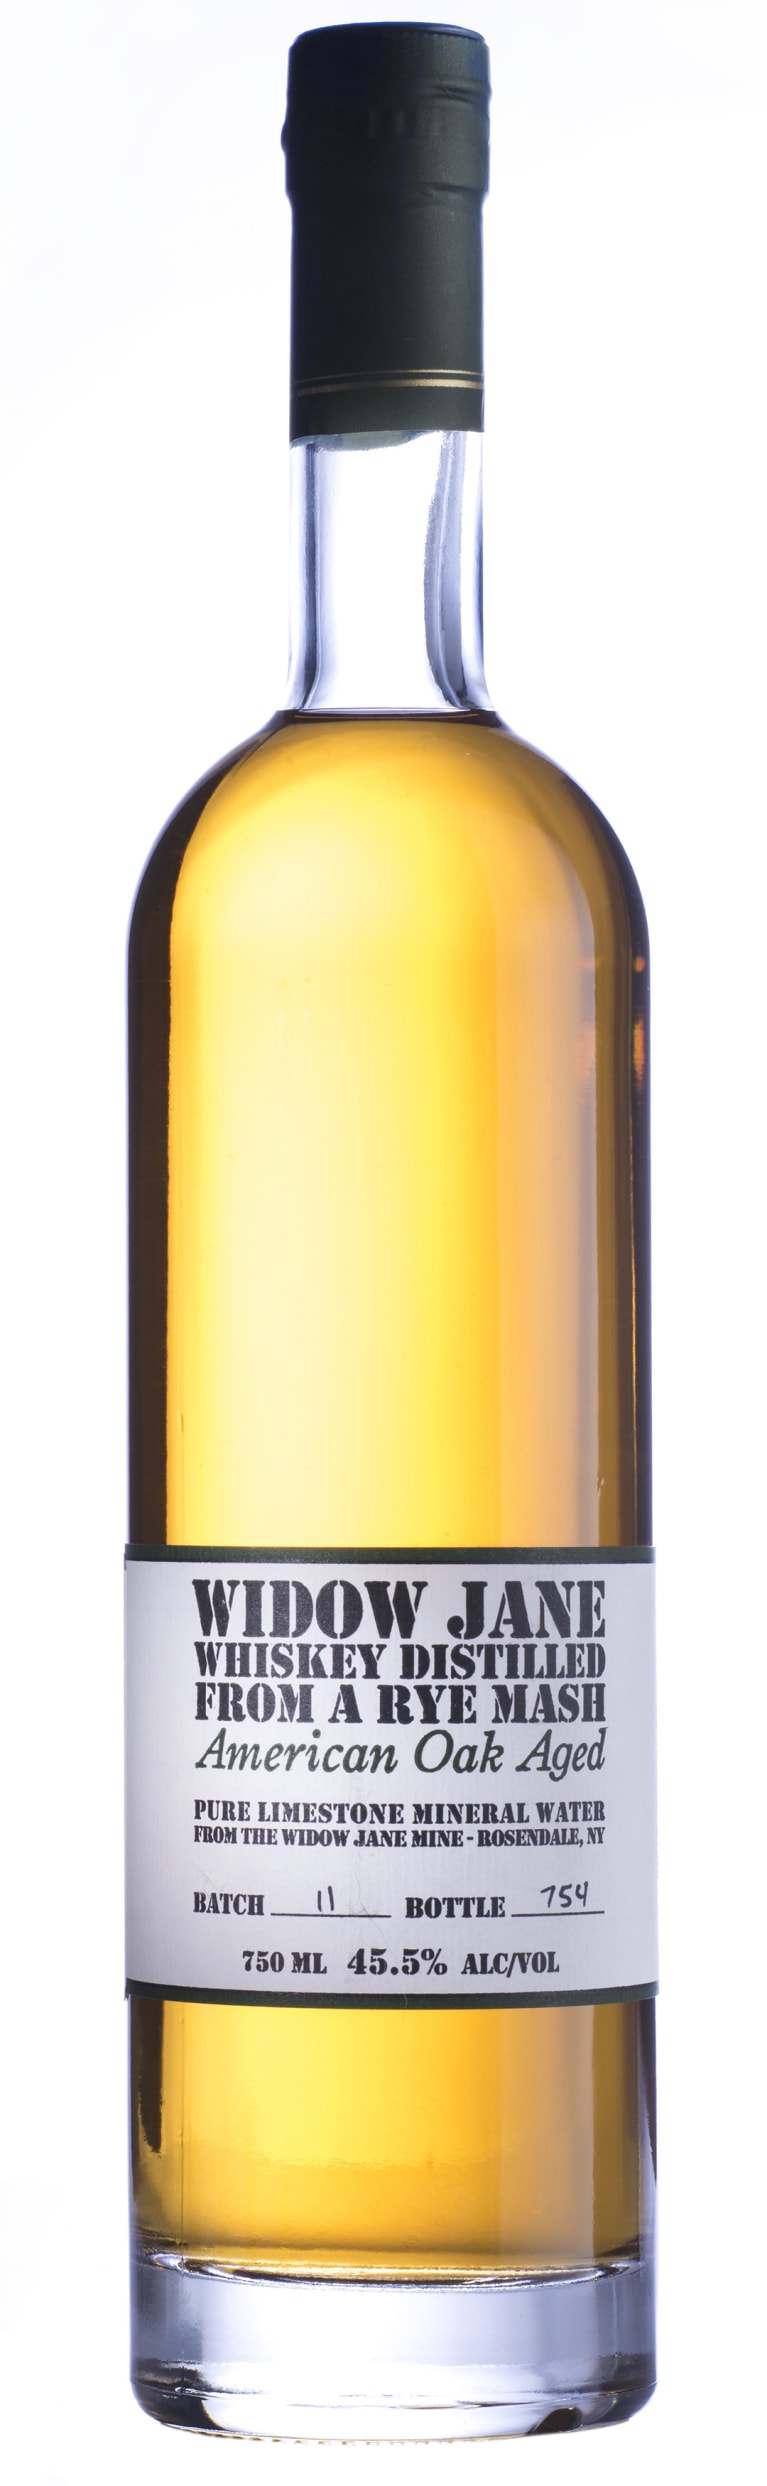 Widow Jane Rye Mash American Oak Aged Whiskey